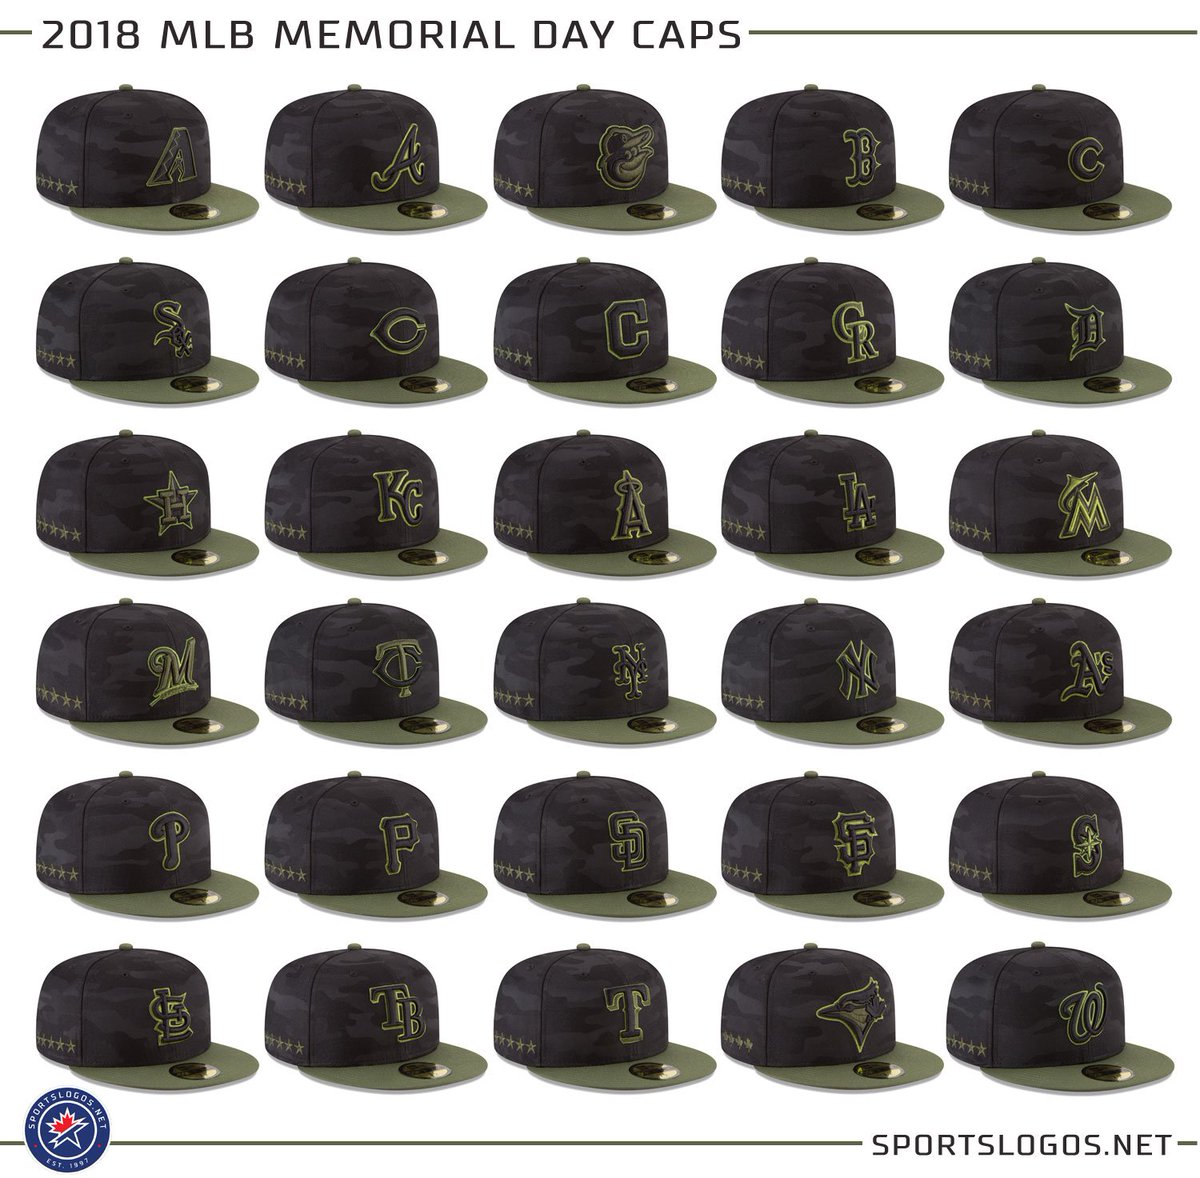 Green Camo Caps Worn Across MLB This Weekend – SportsLogos.Net News